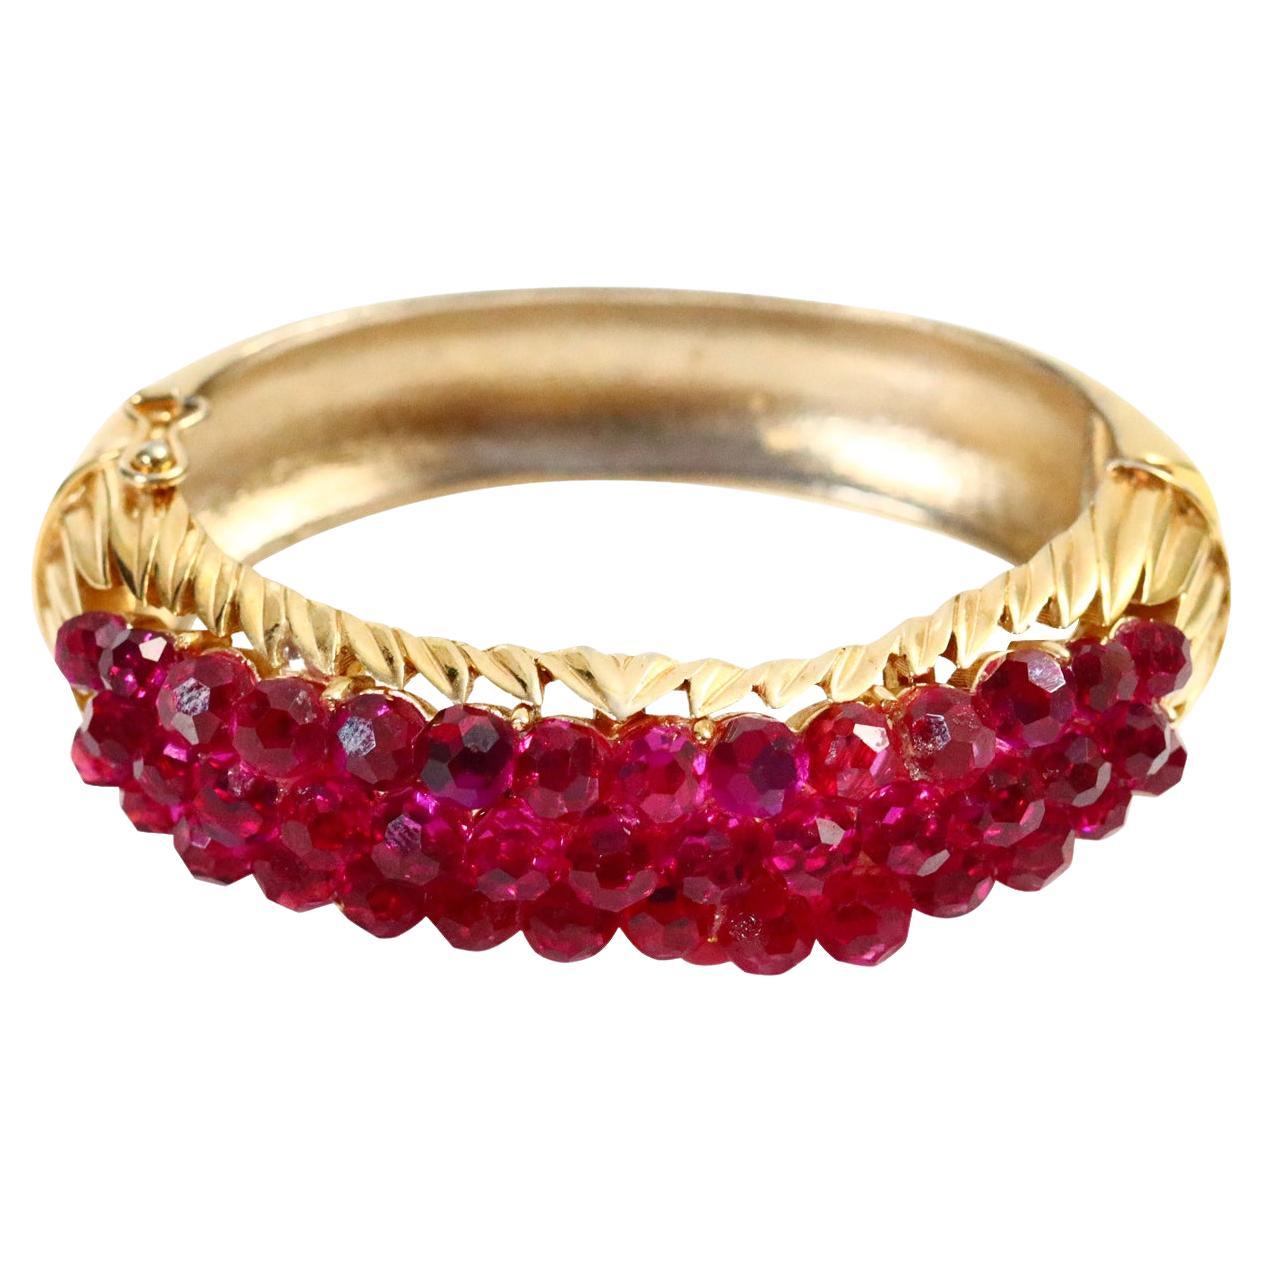 Vintage Trifari Gold Tone Bracelet with Pink Beads